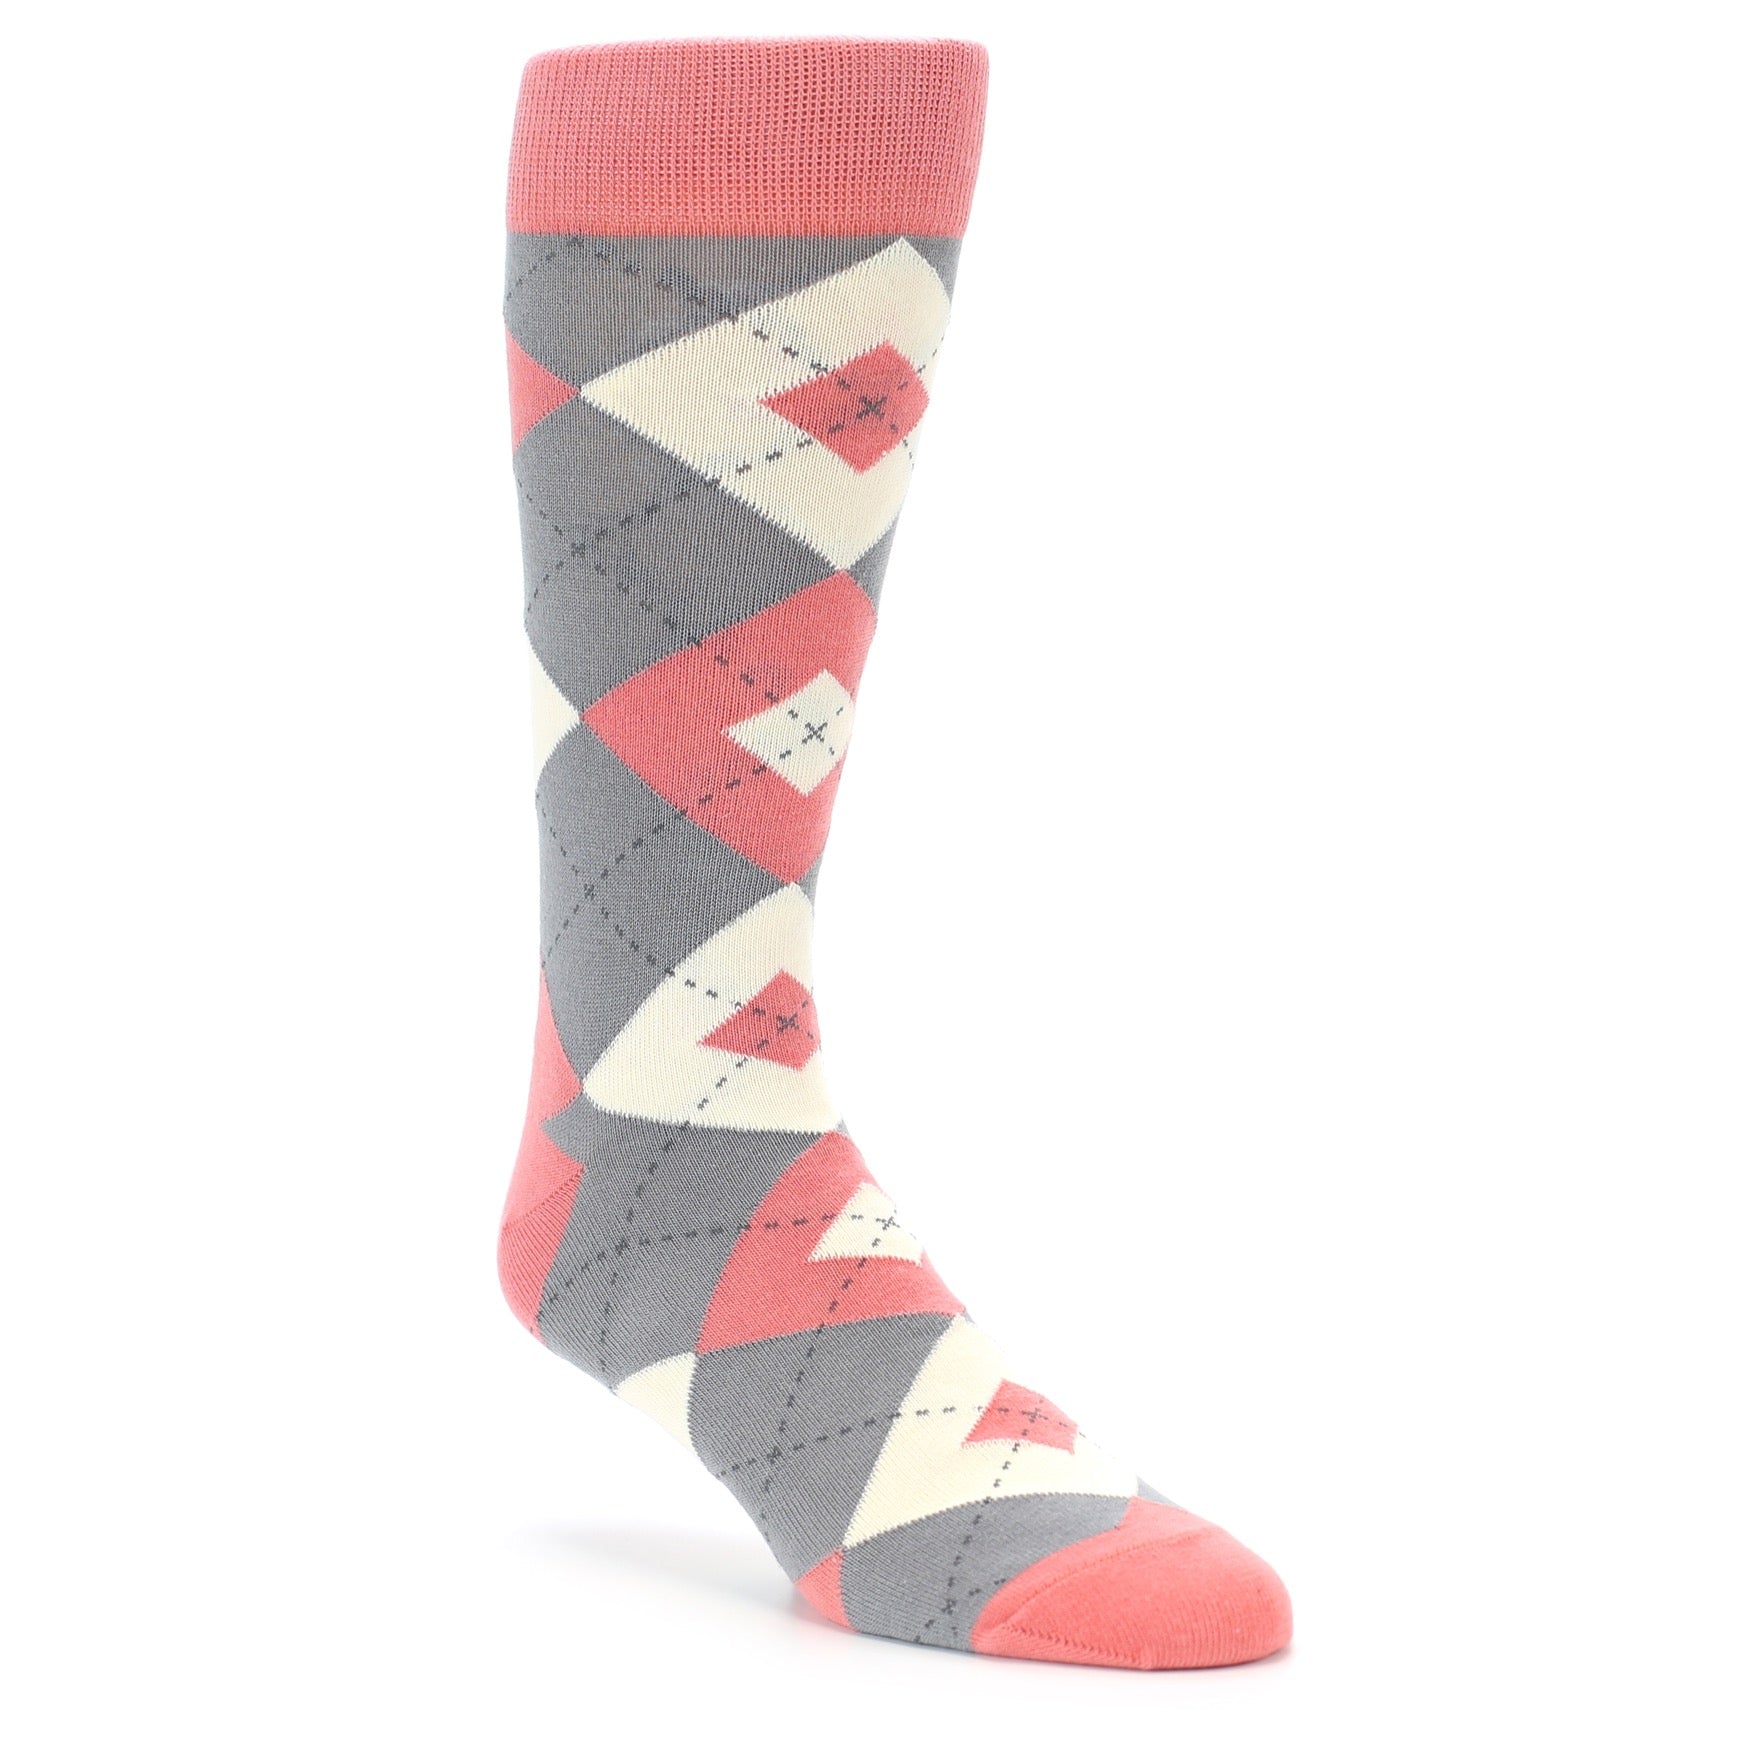 Coral and Grey Wedding Socks